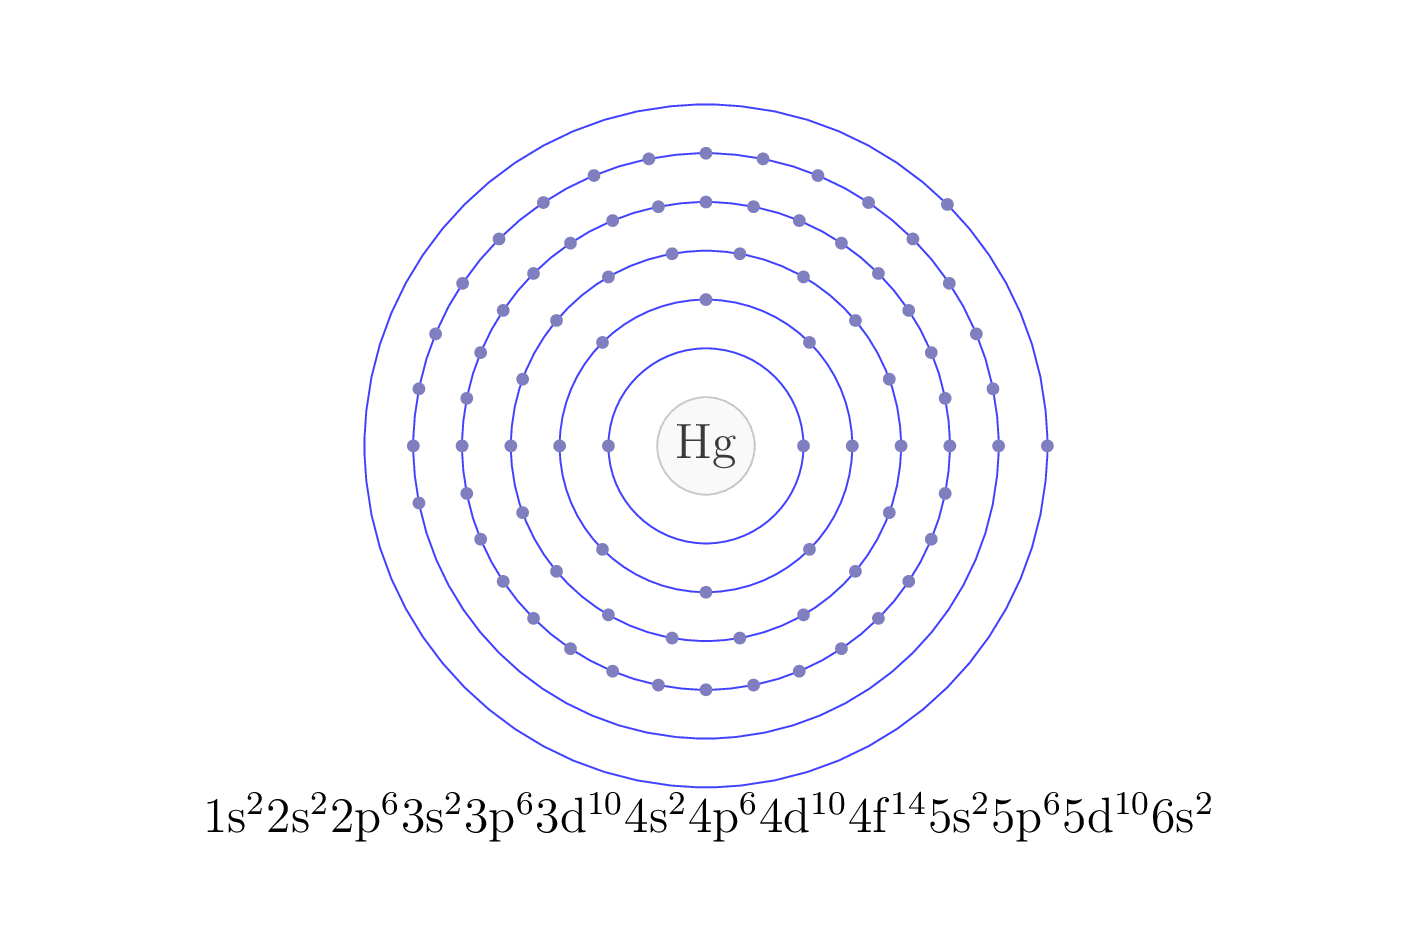 electron configuration of element Hg